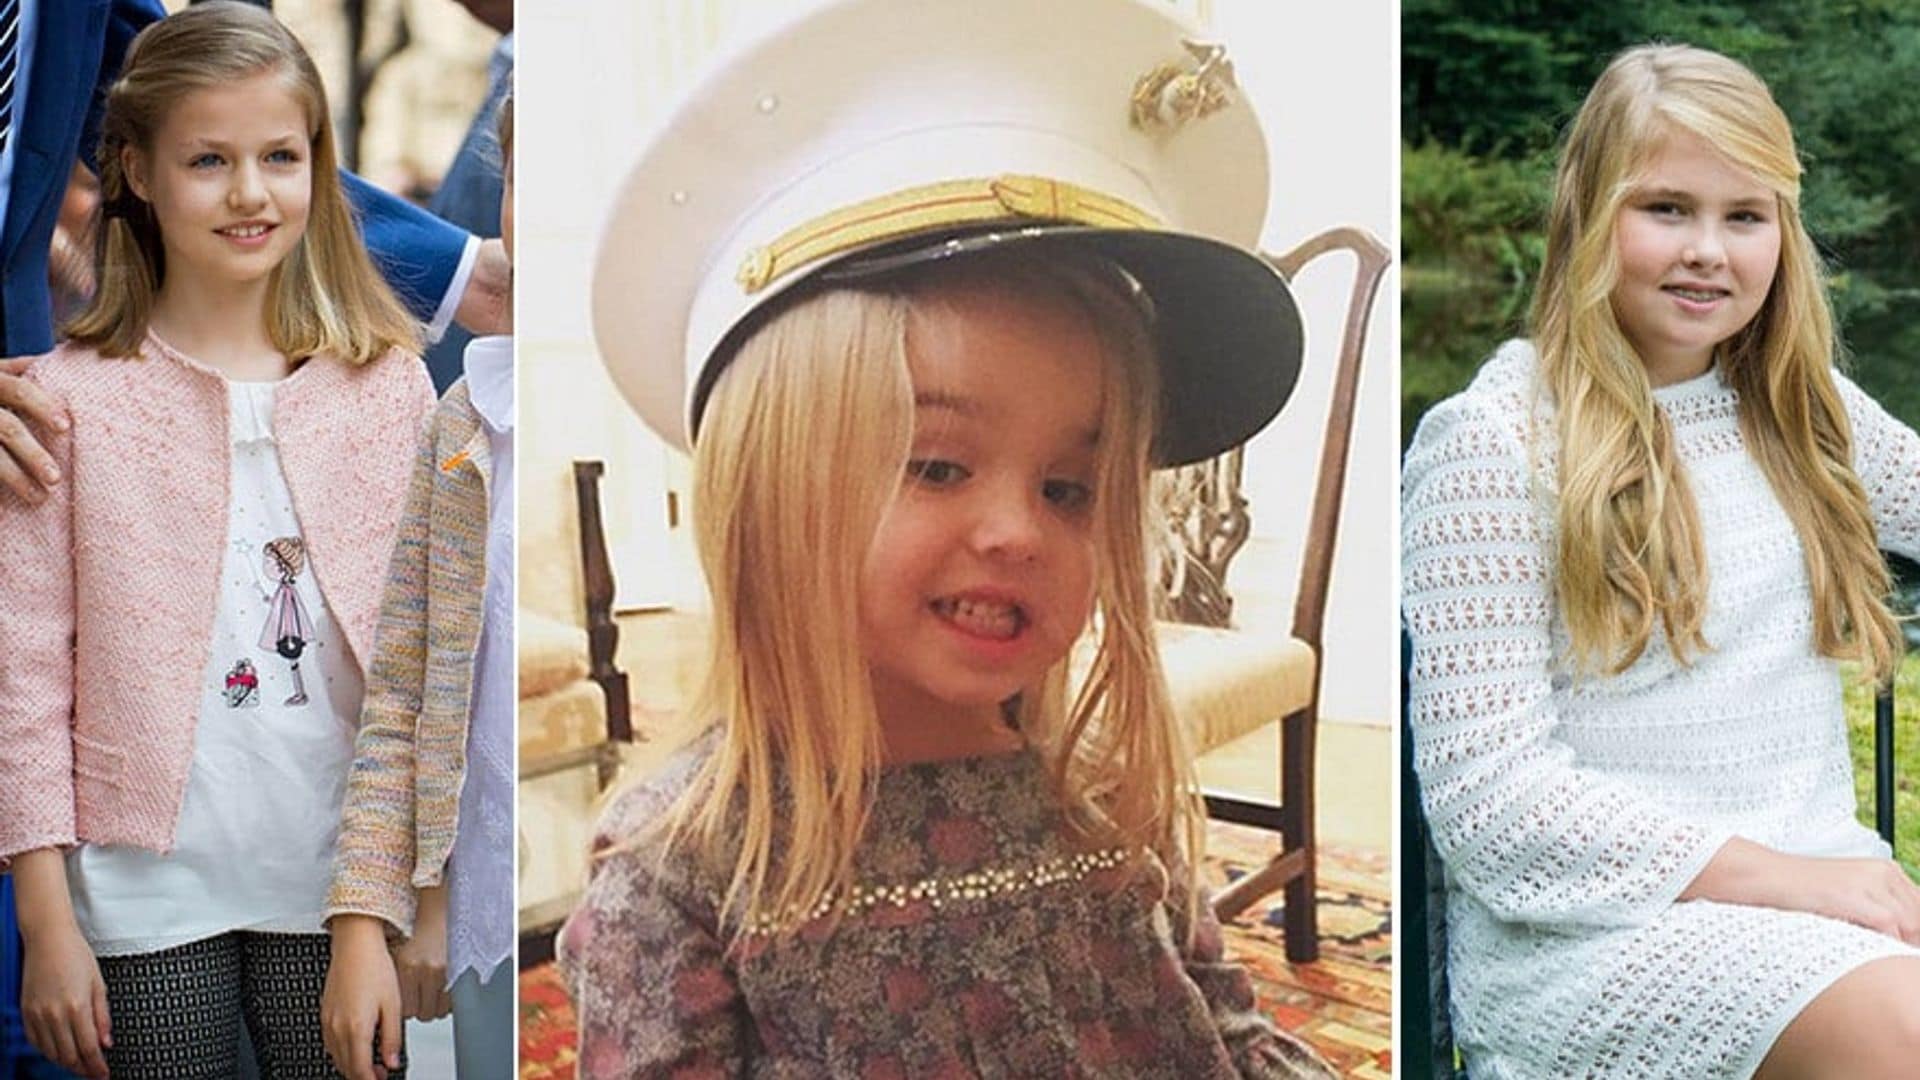 Donald Trump's grandchildren Tristan and Chloe wear royal kids' brand Pili Carrera